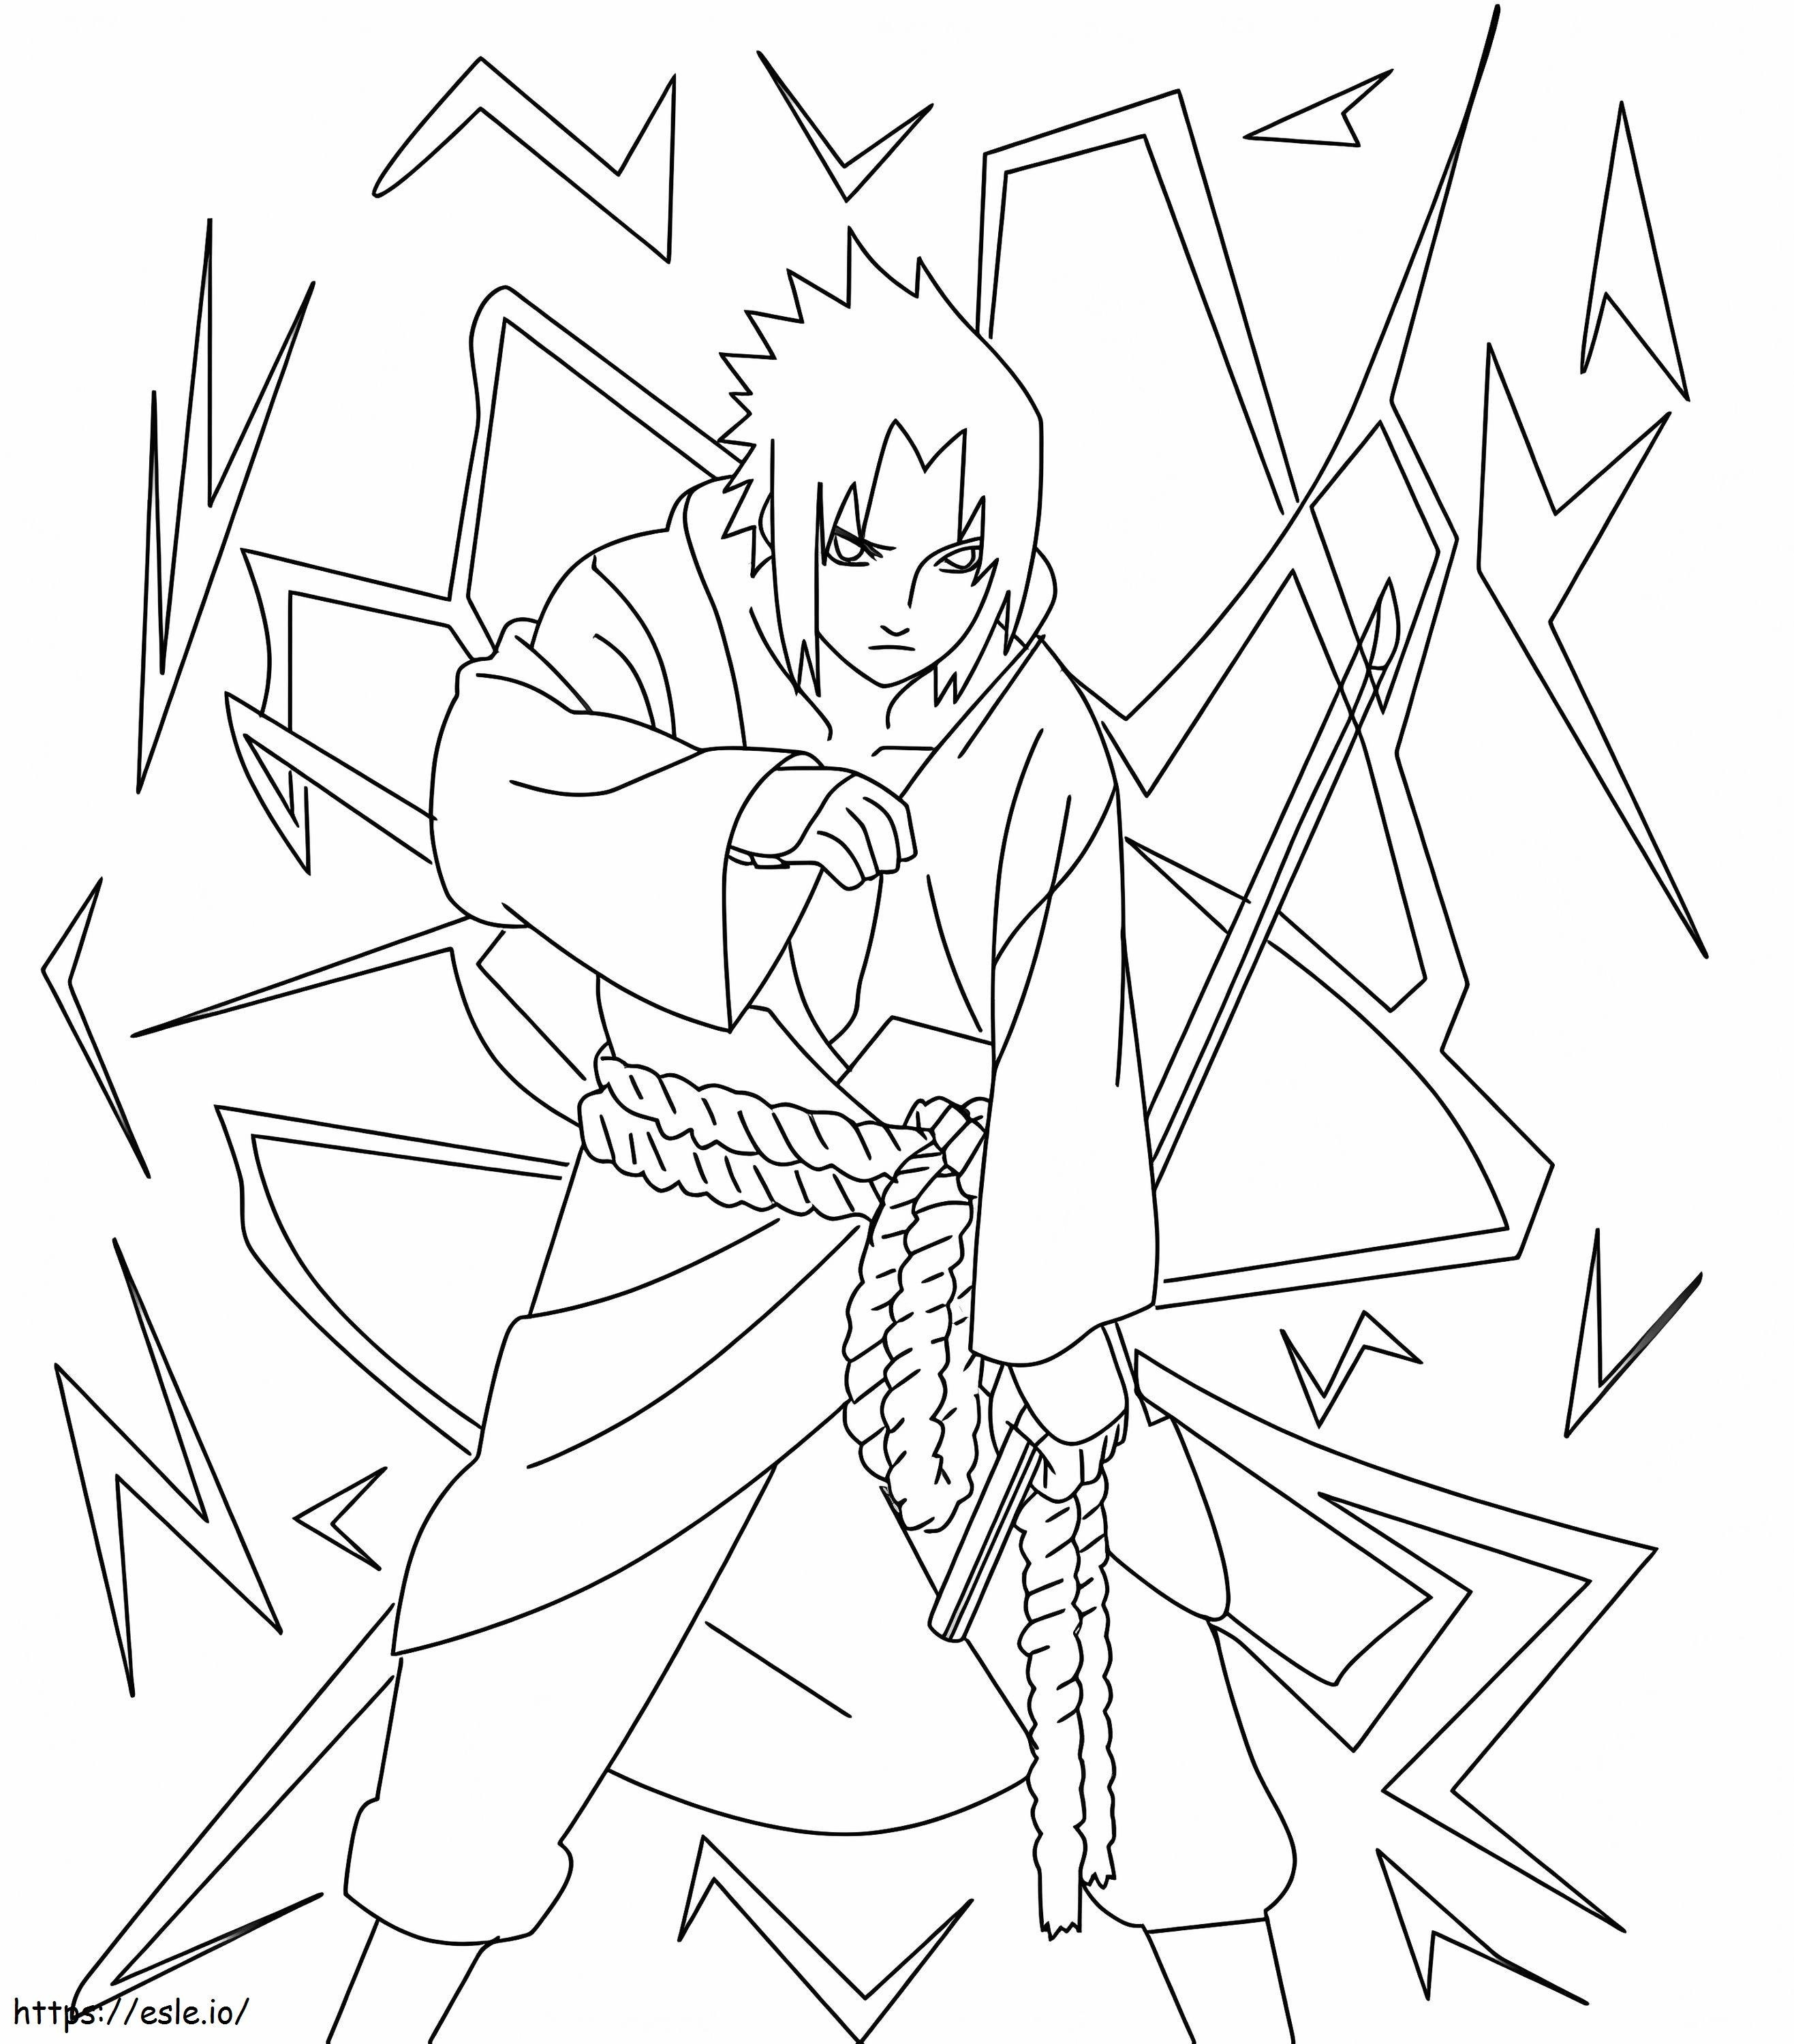 Sasuke 4 coloring page